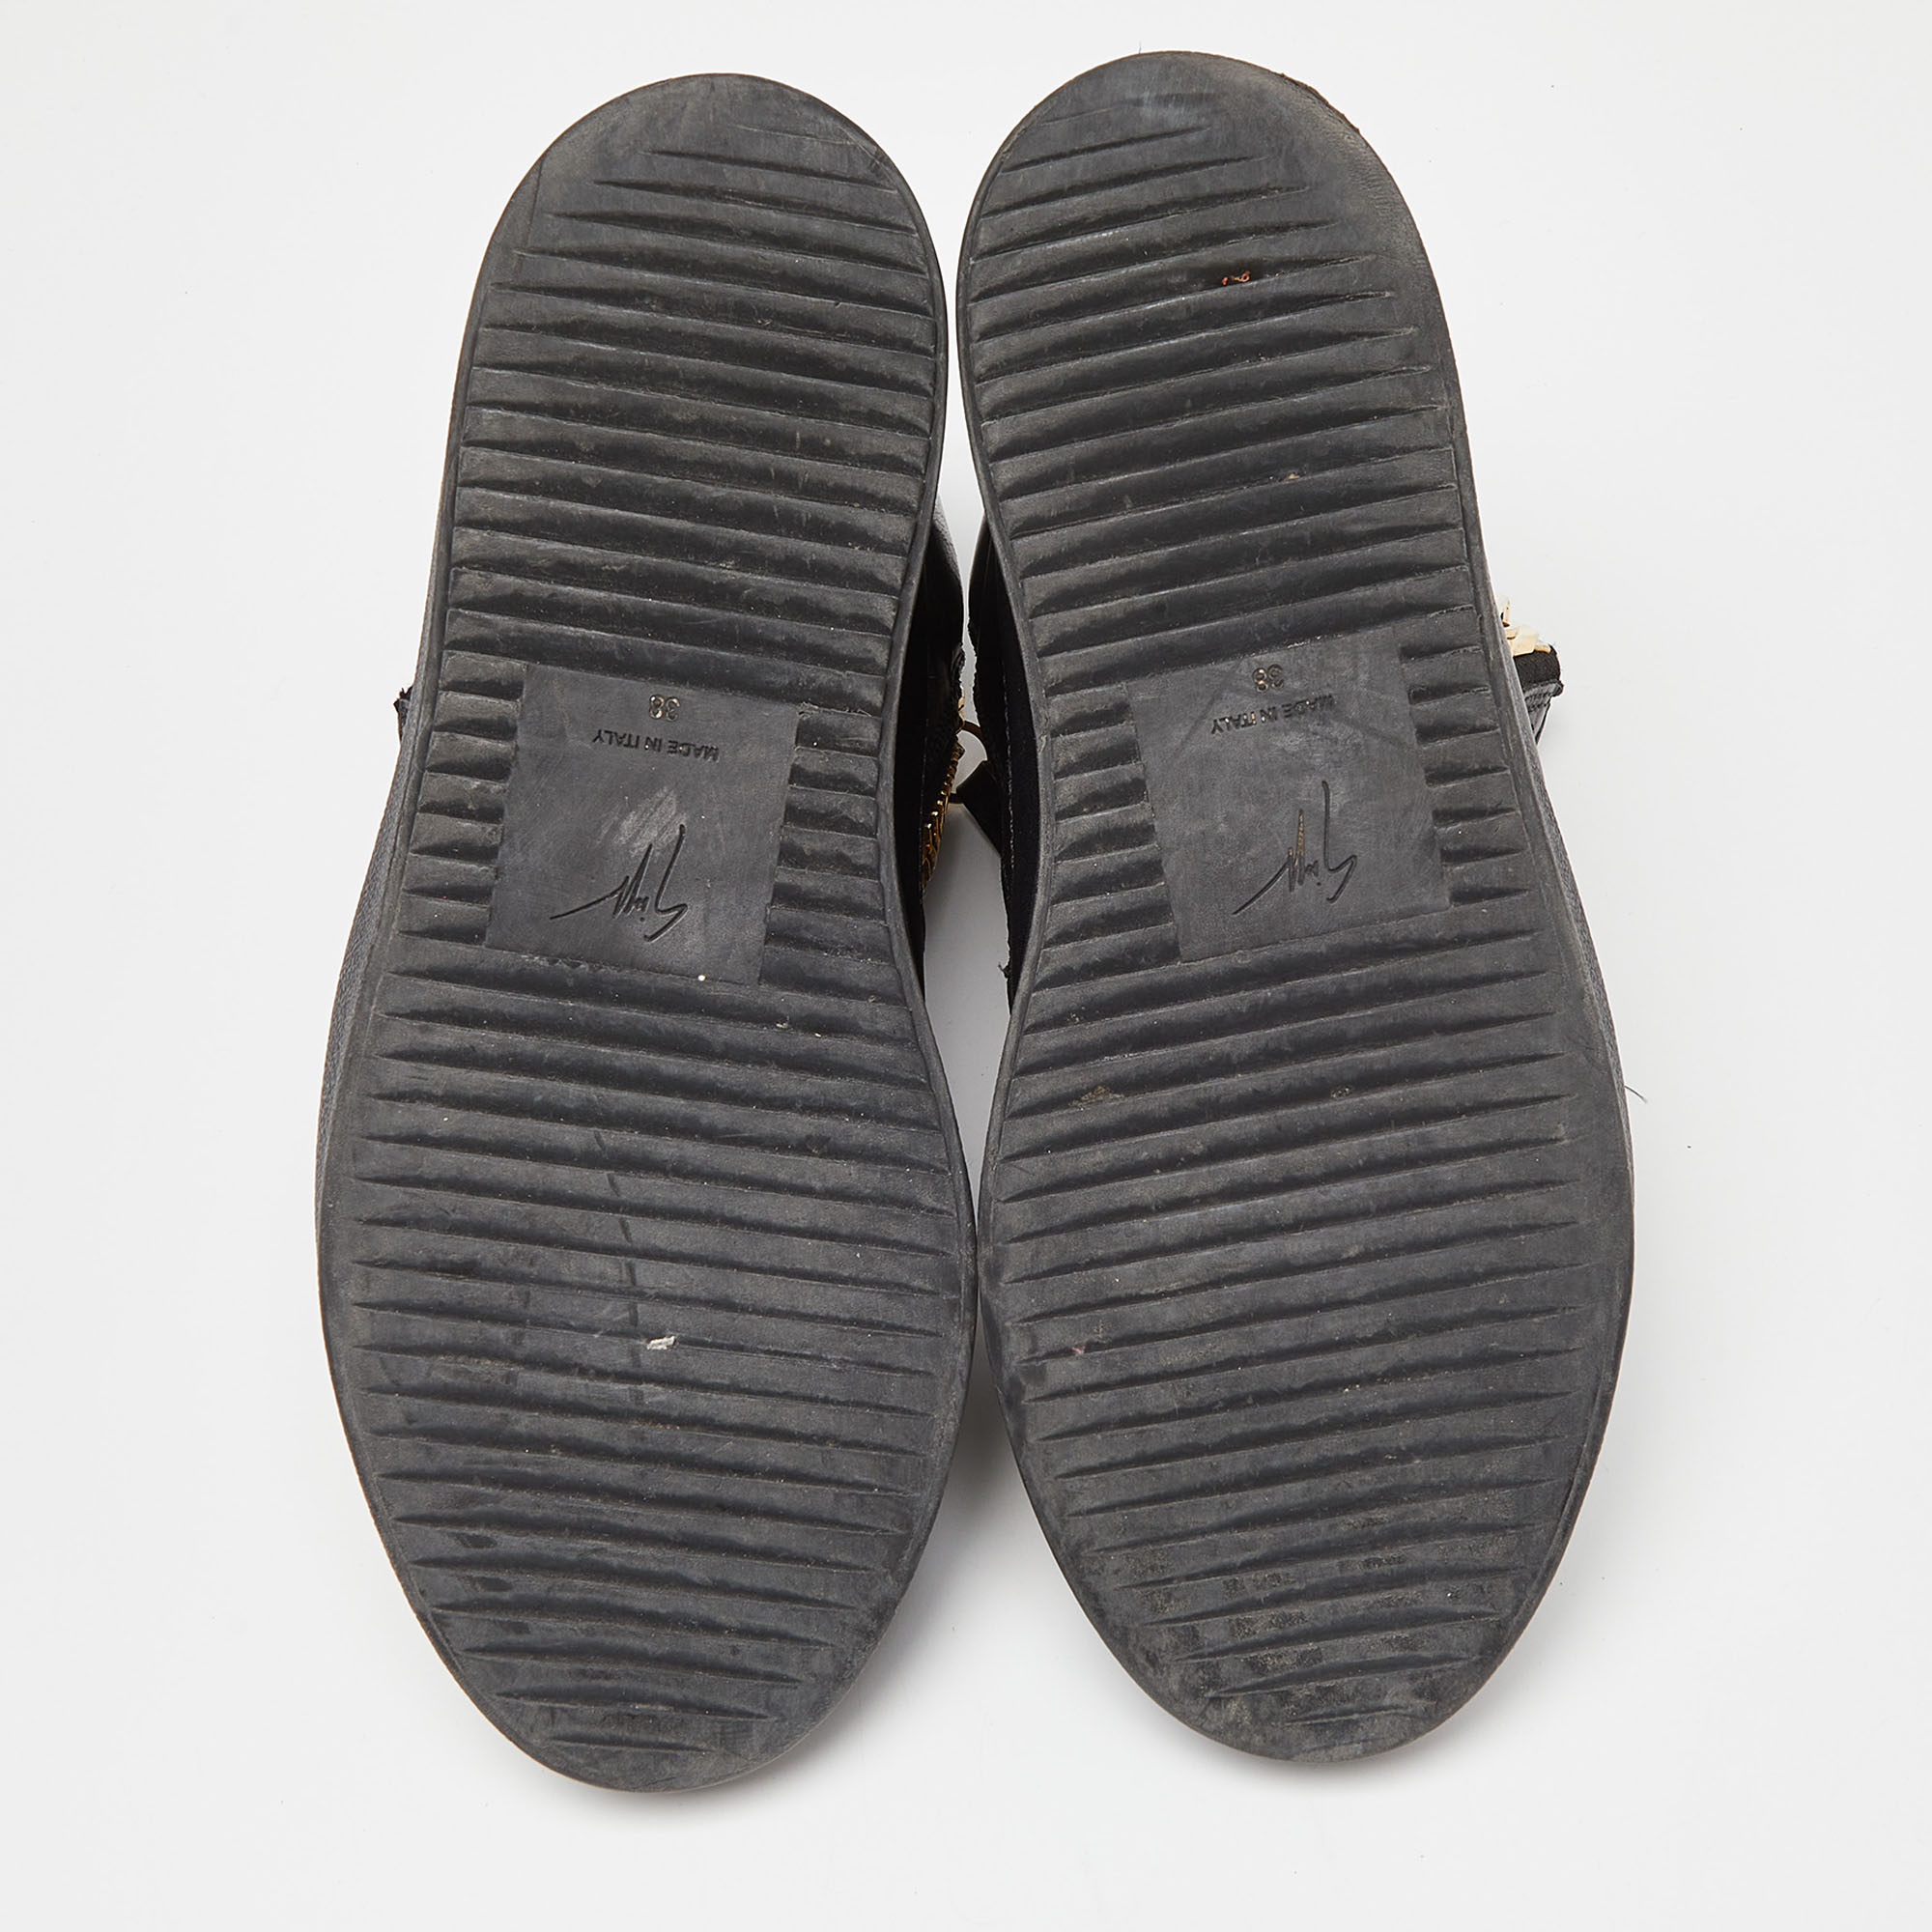 Giuseppe Zanotti Black Leather London Birel Chain Embellished High Top Sneakers Size 38